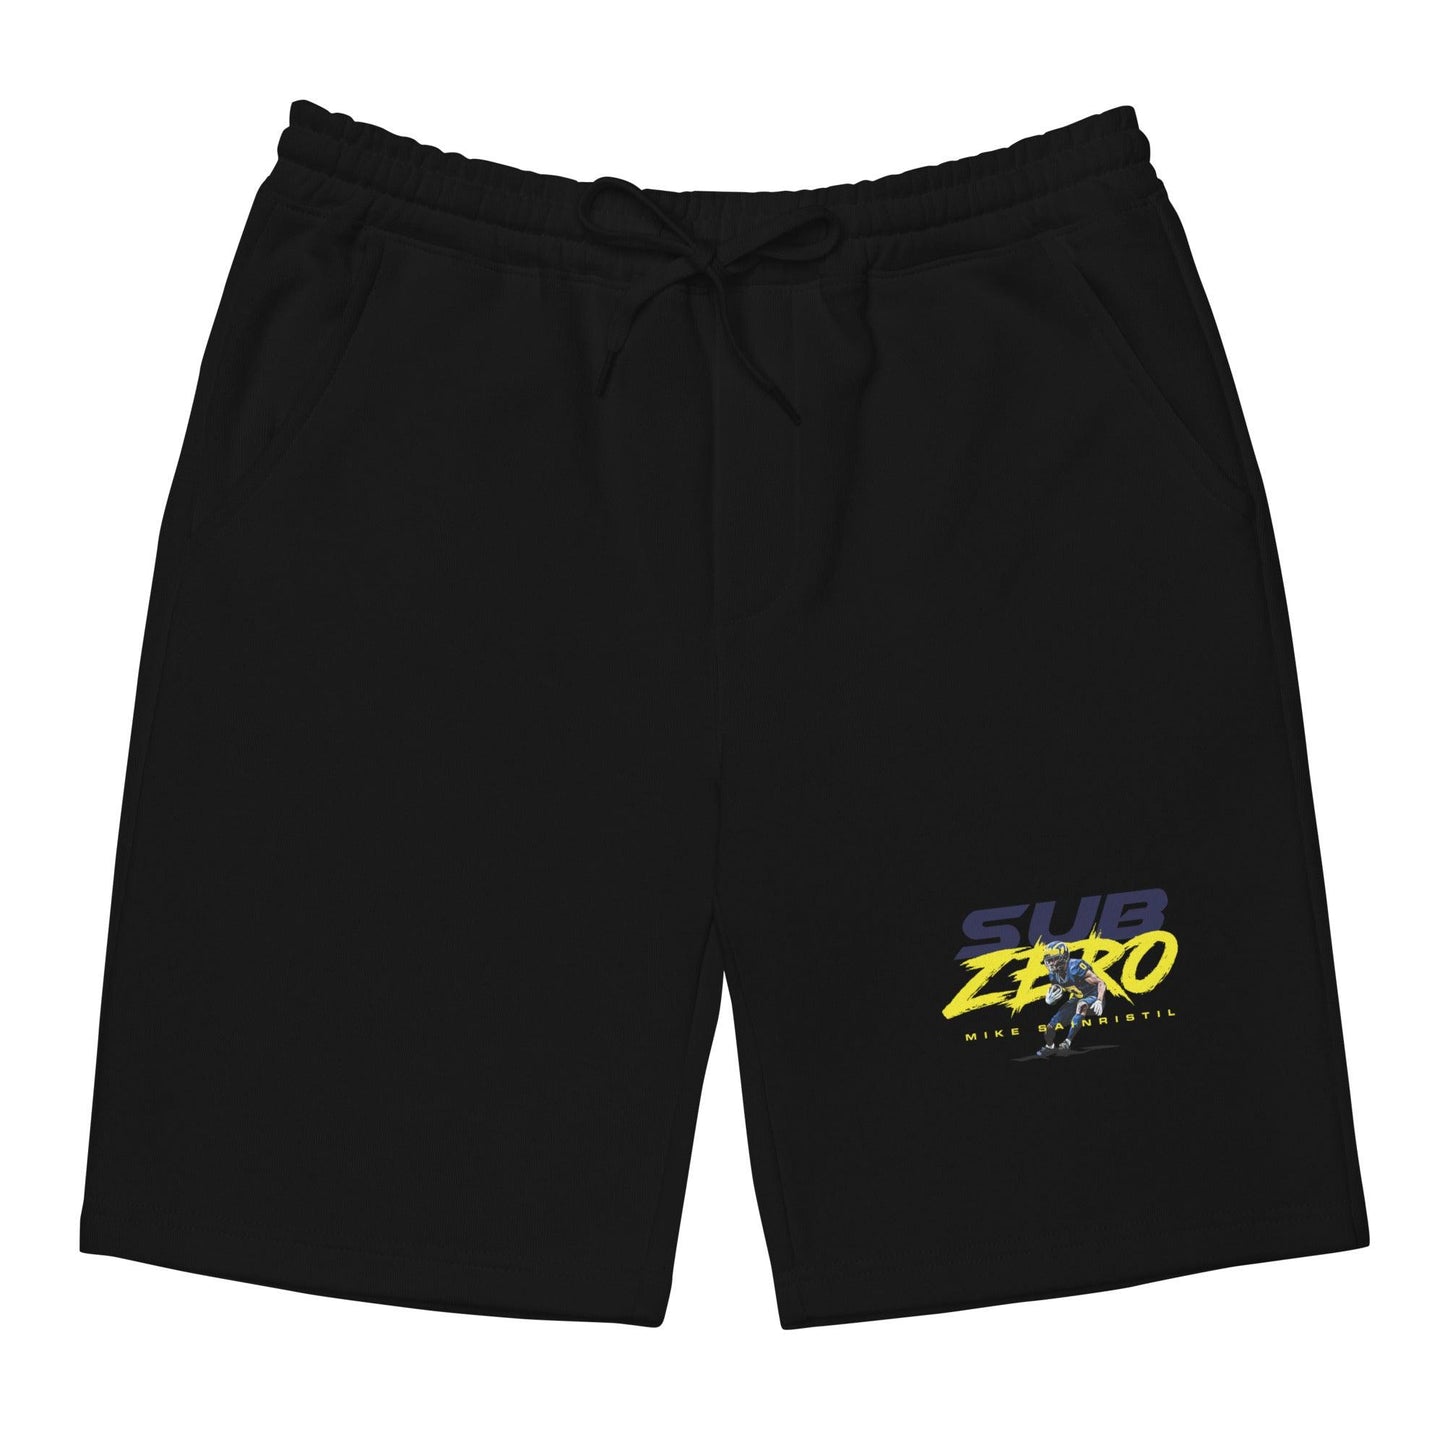 Mike Sainristil "Sub Zero" shorts - Fan Arch